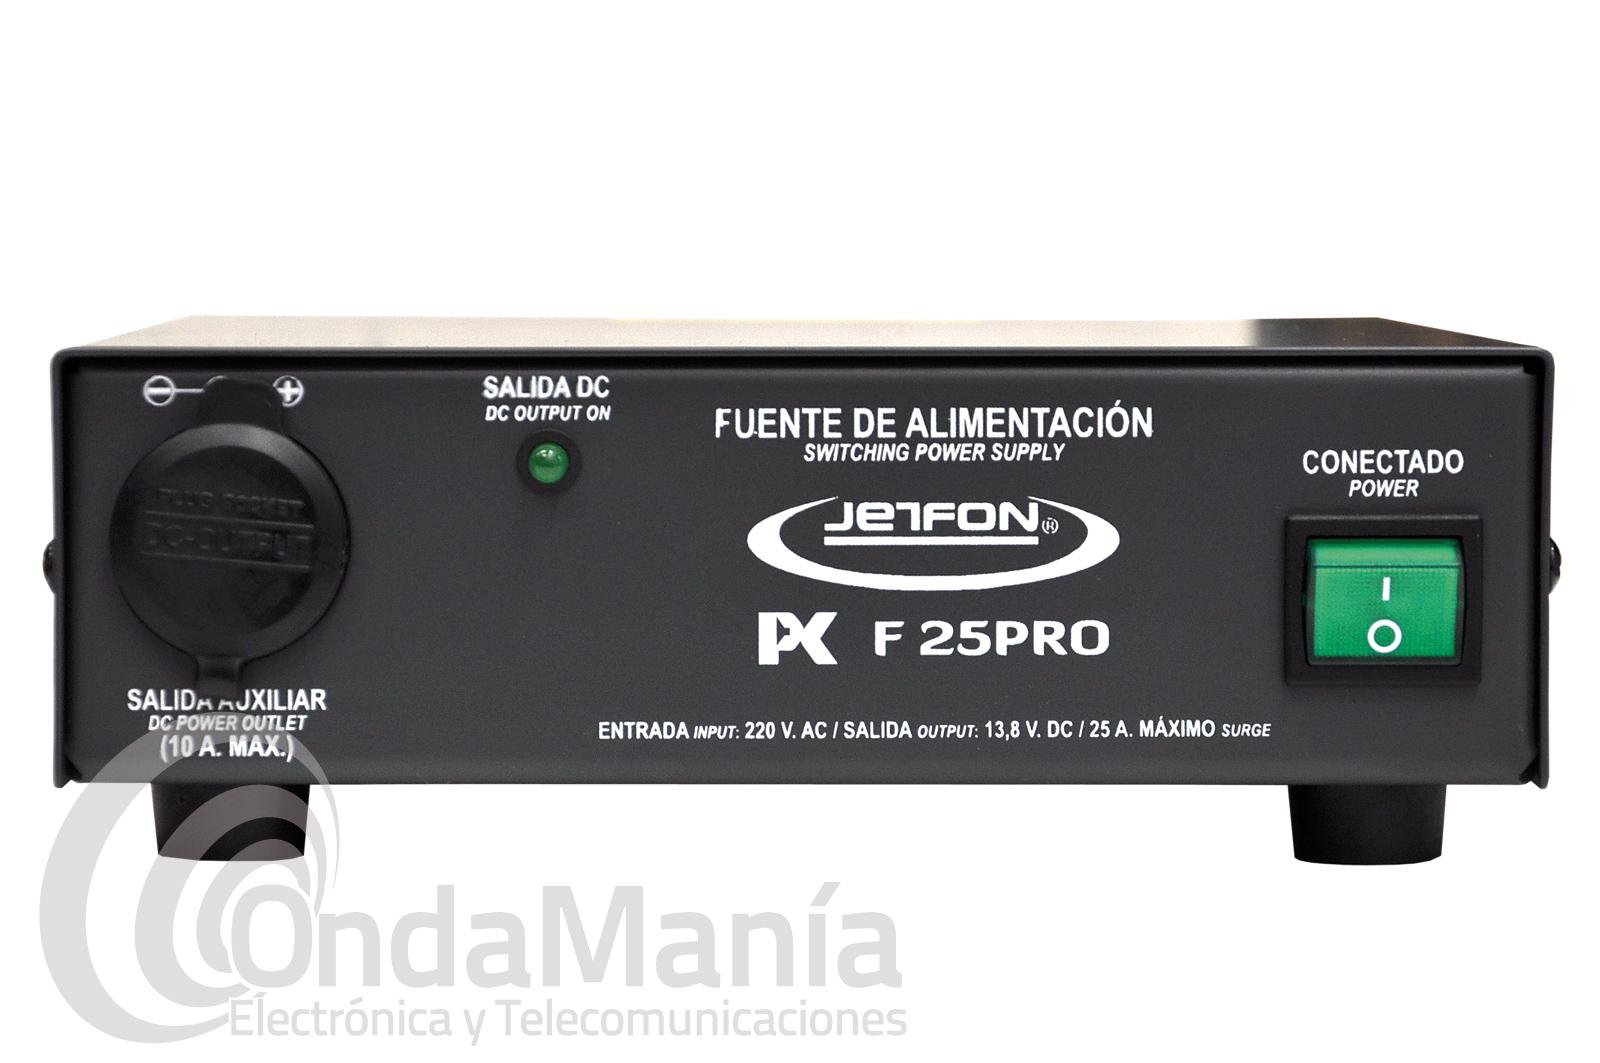 TELECOM SPS-79 FUENTE DE ALIMENTACION CONMUTADA CON 13,8 V Y DE 7 A 9 AMP., TELECOM